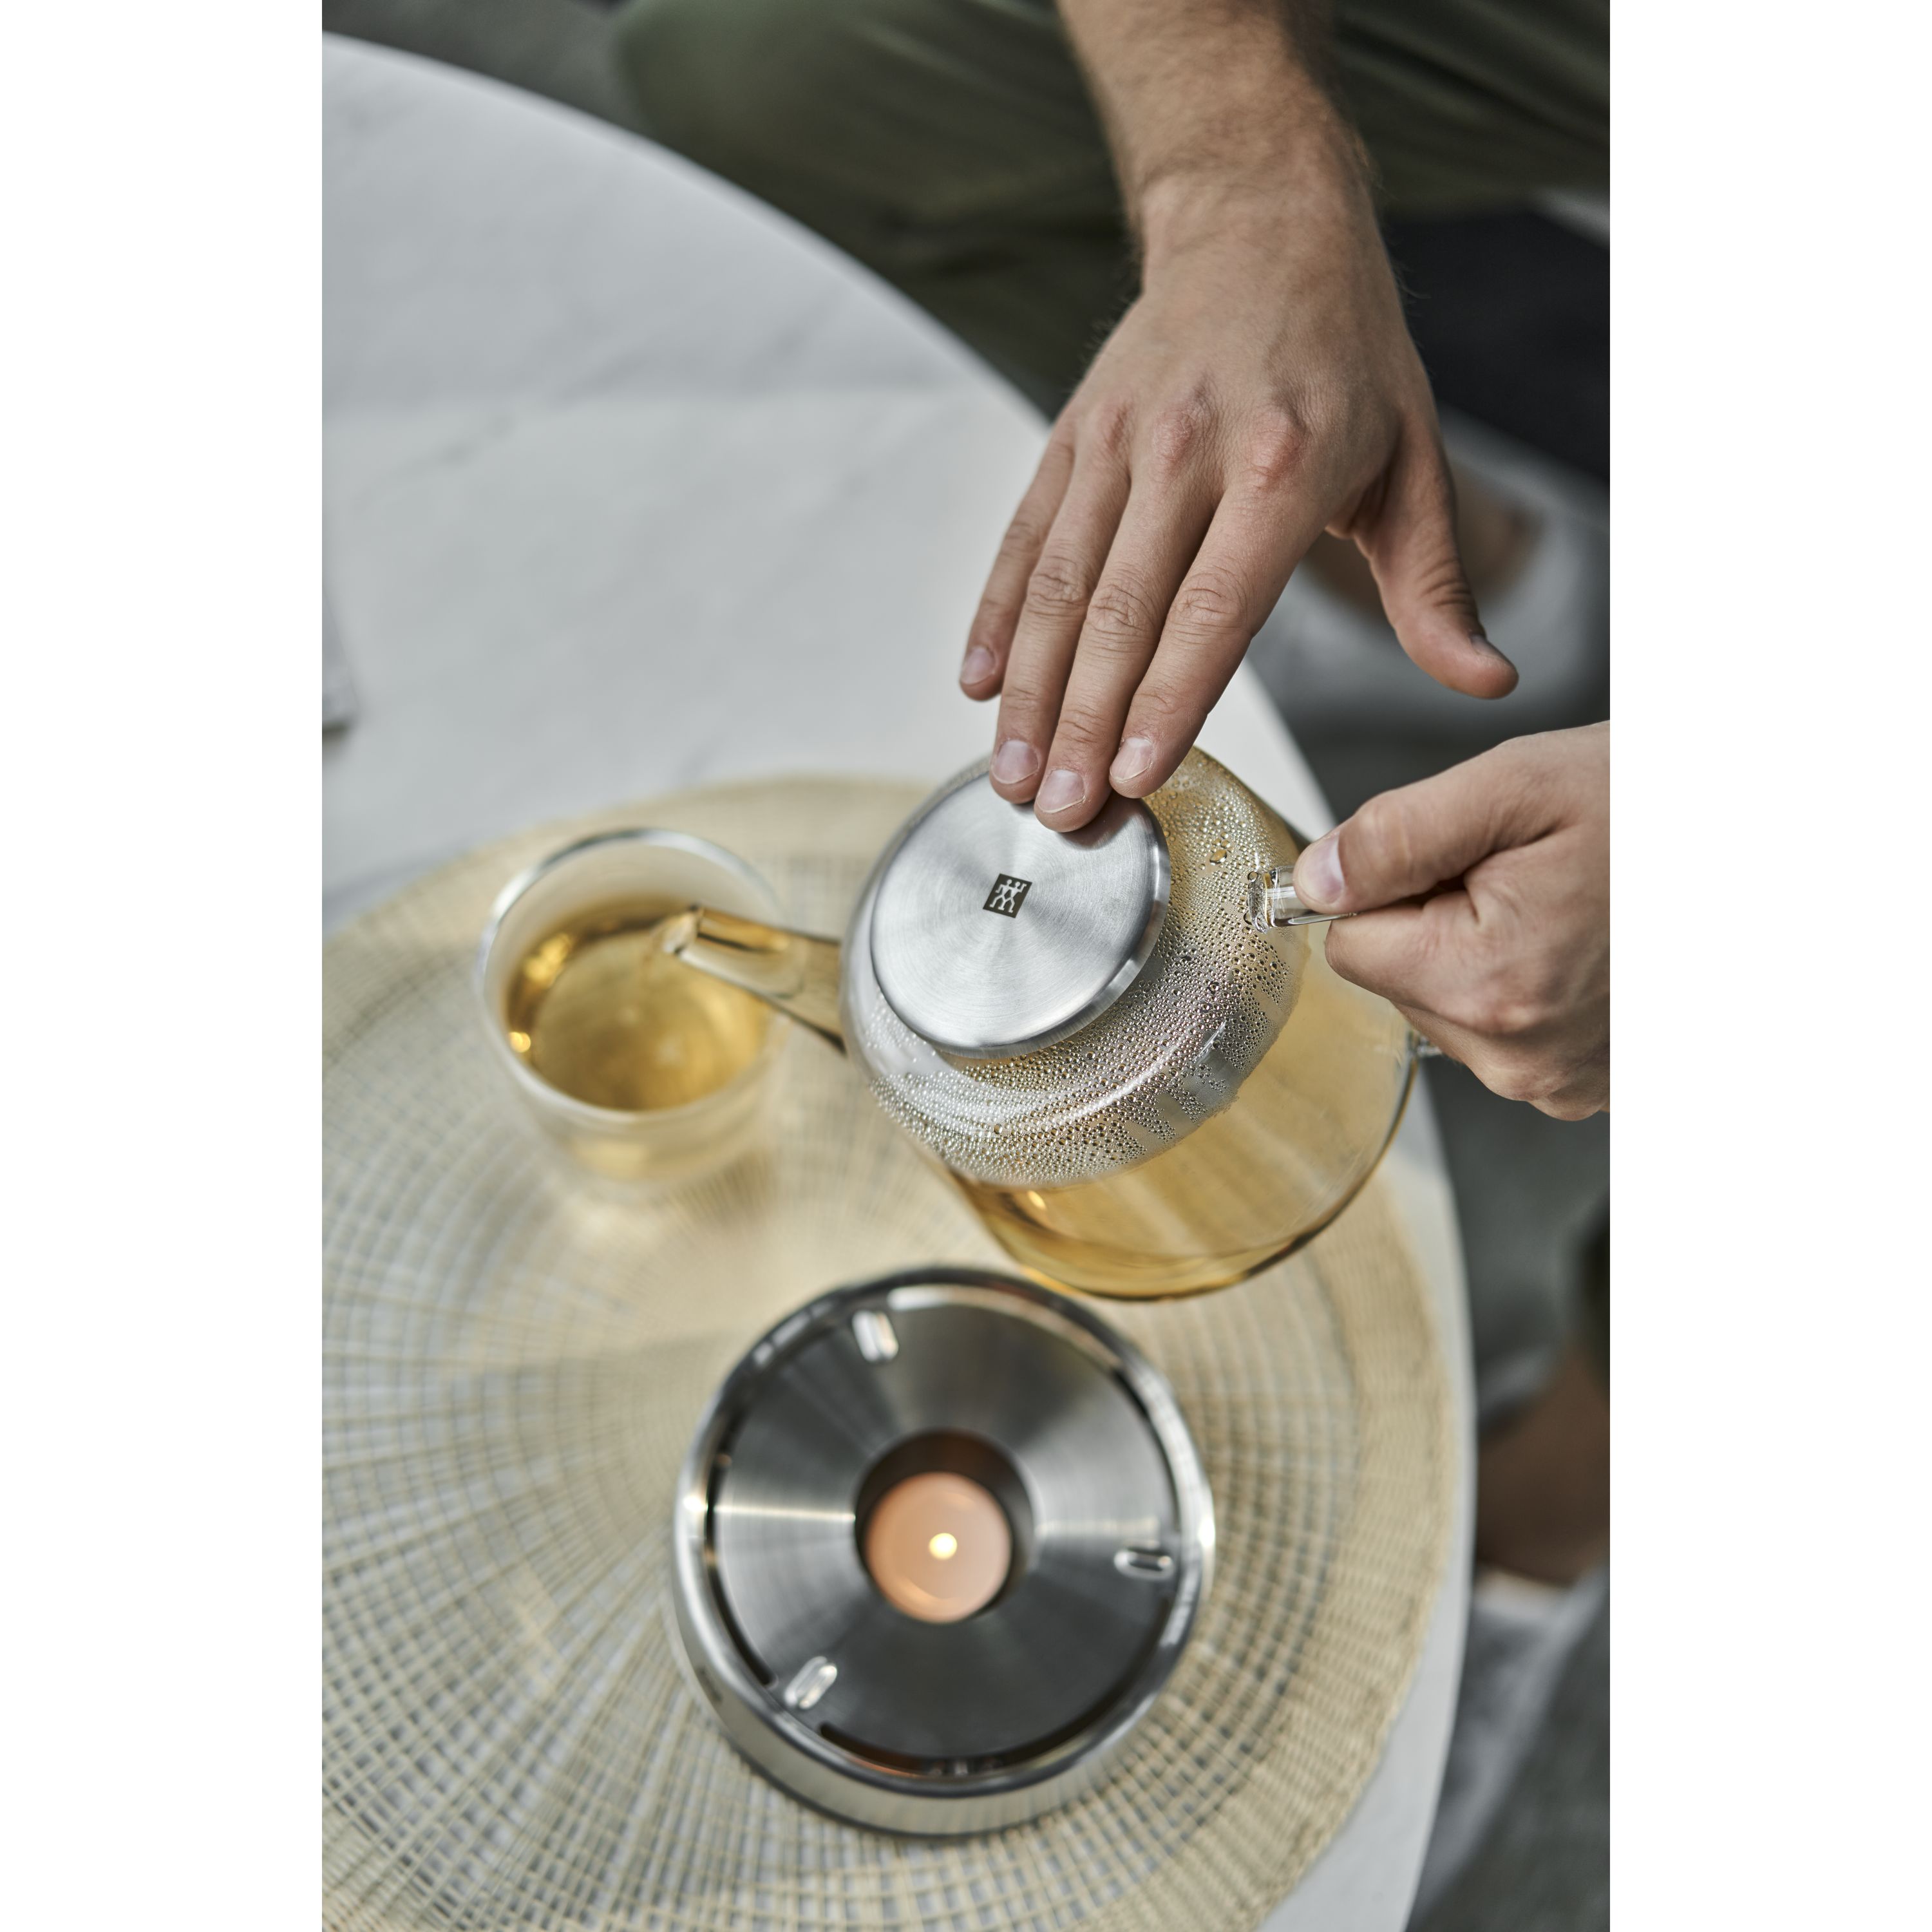 Buy ZWILLING Sorrento Double Wall Glassware Tea and coffee pot